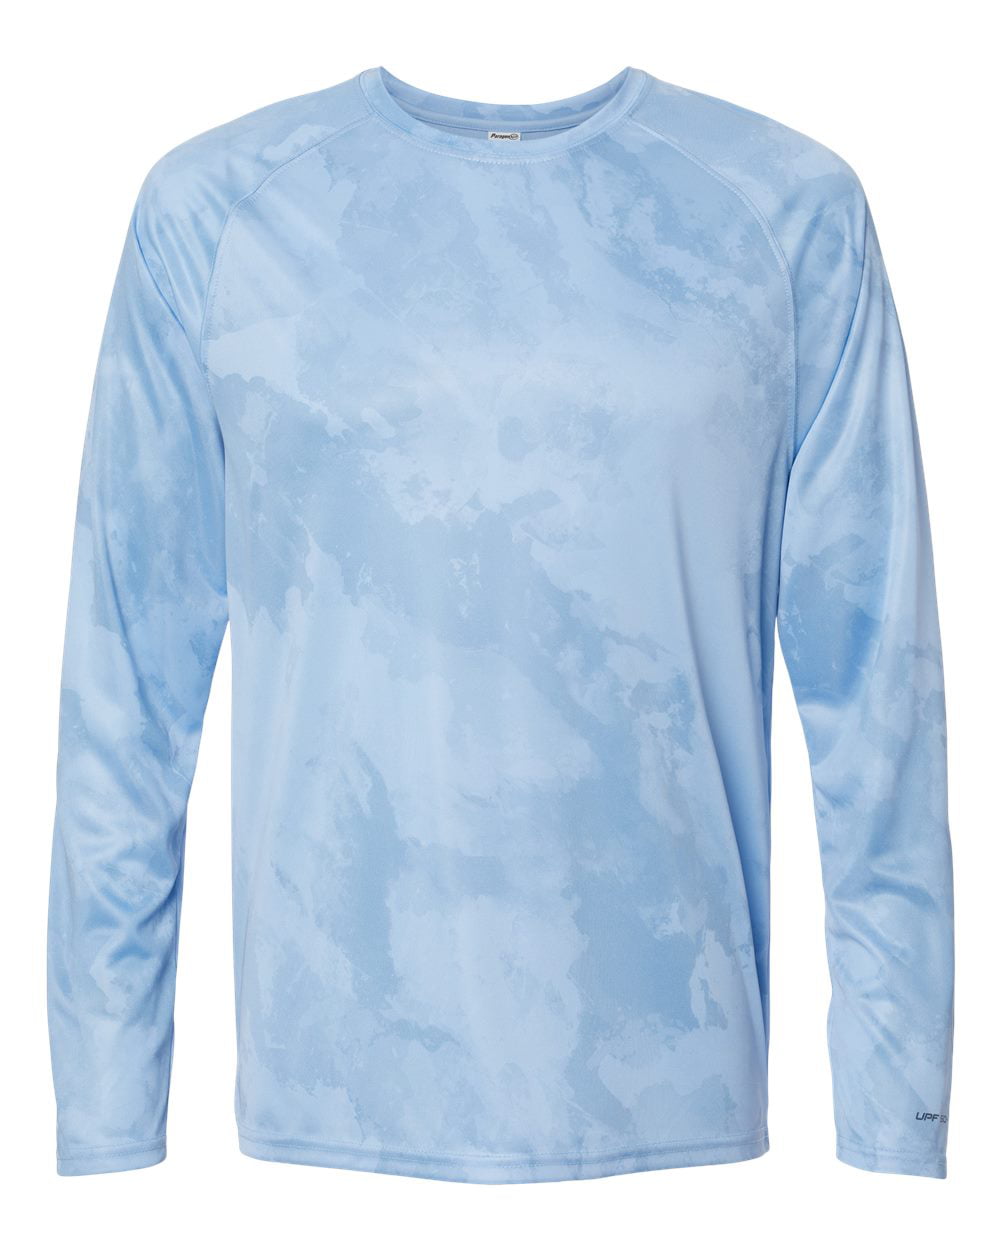 Paragon Cabo Camo Performance Long Sleeve T-Shirt, Blue Mist - L